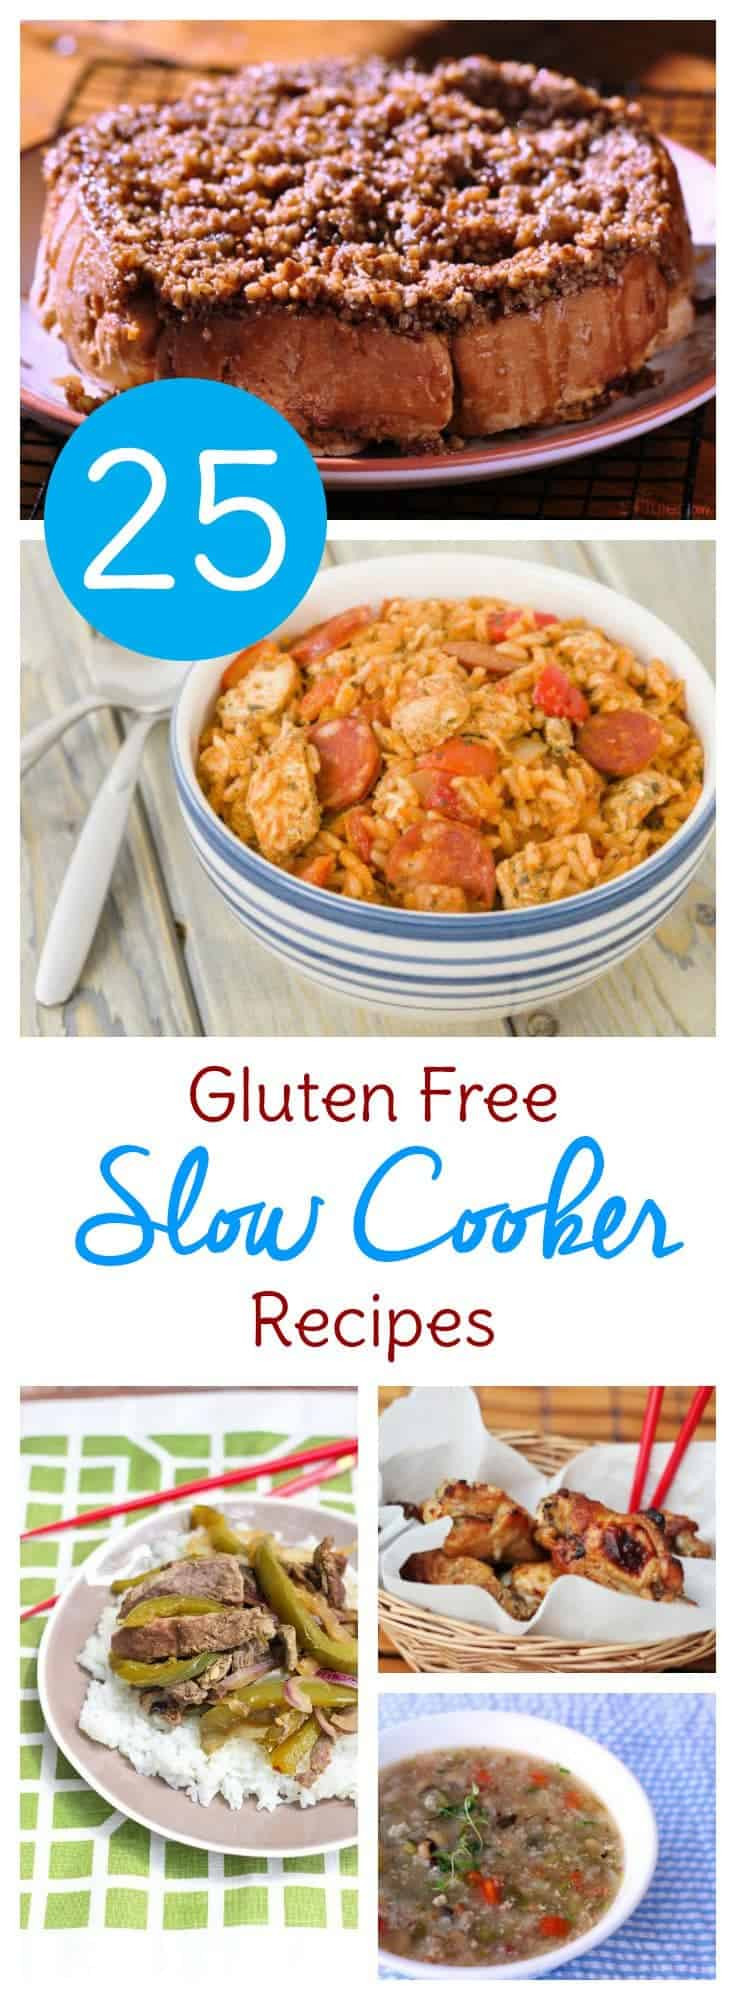 Gluten And Dairy Free Crockpot Recipes
 Gluten free crock pot recipes easy Food easy recipes